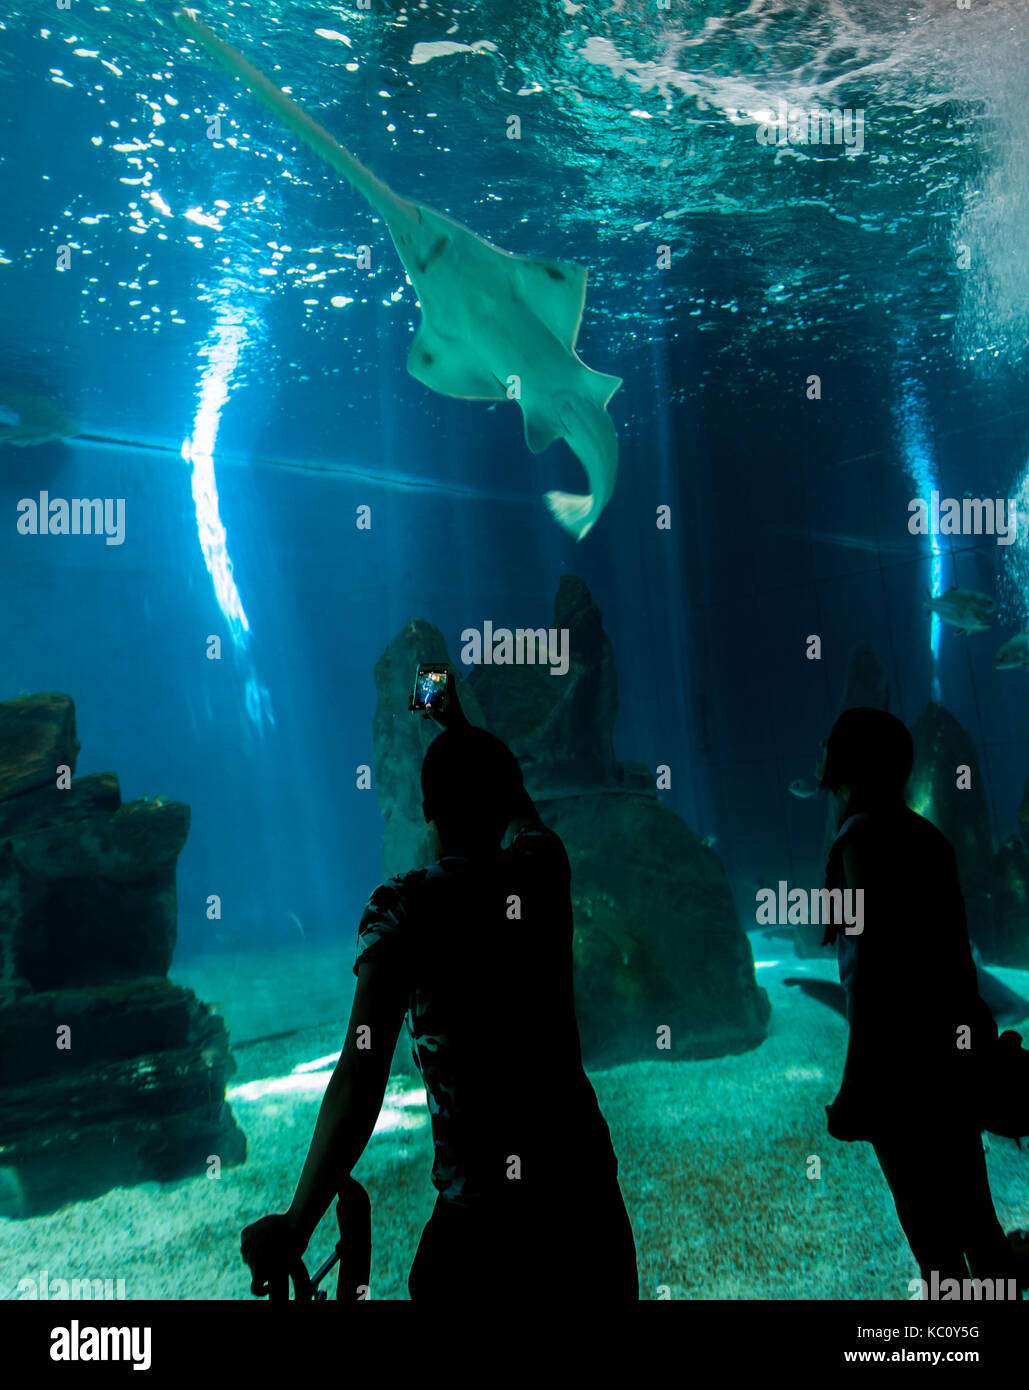 Genua, Italien - Juni 2, 2015: Nicht identifizierte Personen in Genua Aquarium. Das Aquarium von Genua ist das größte Aquarium in Italien und zu den größten in der EU Stockfoto